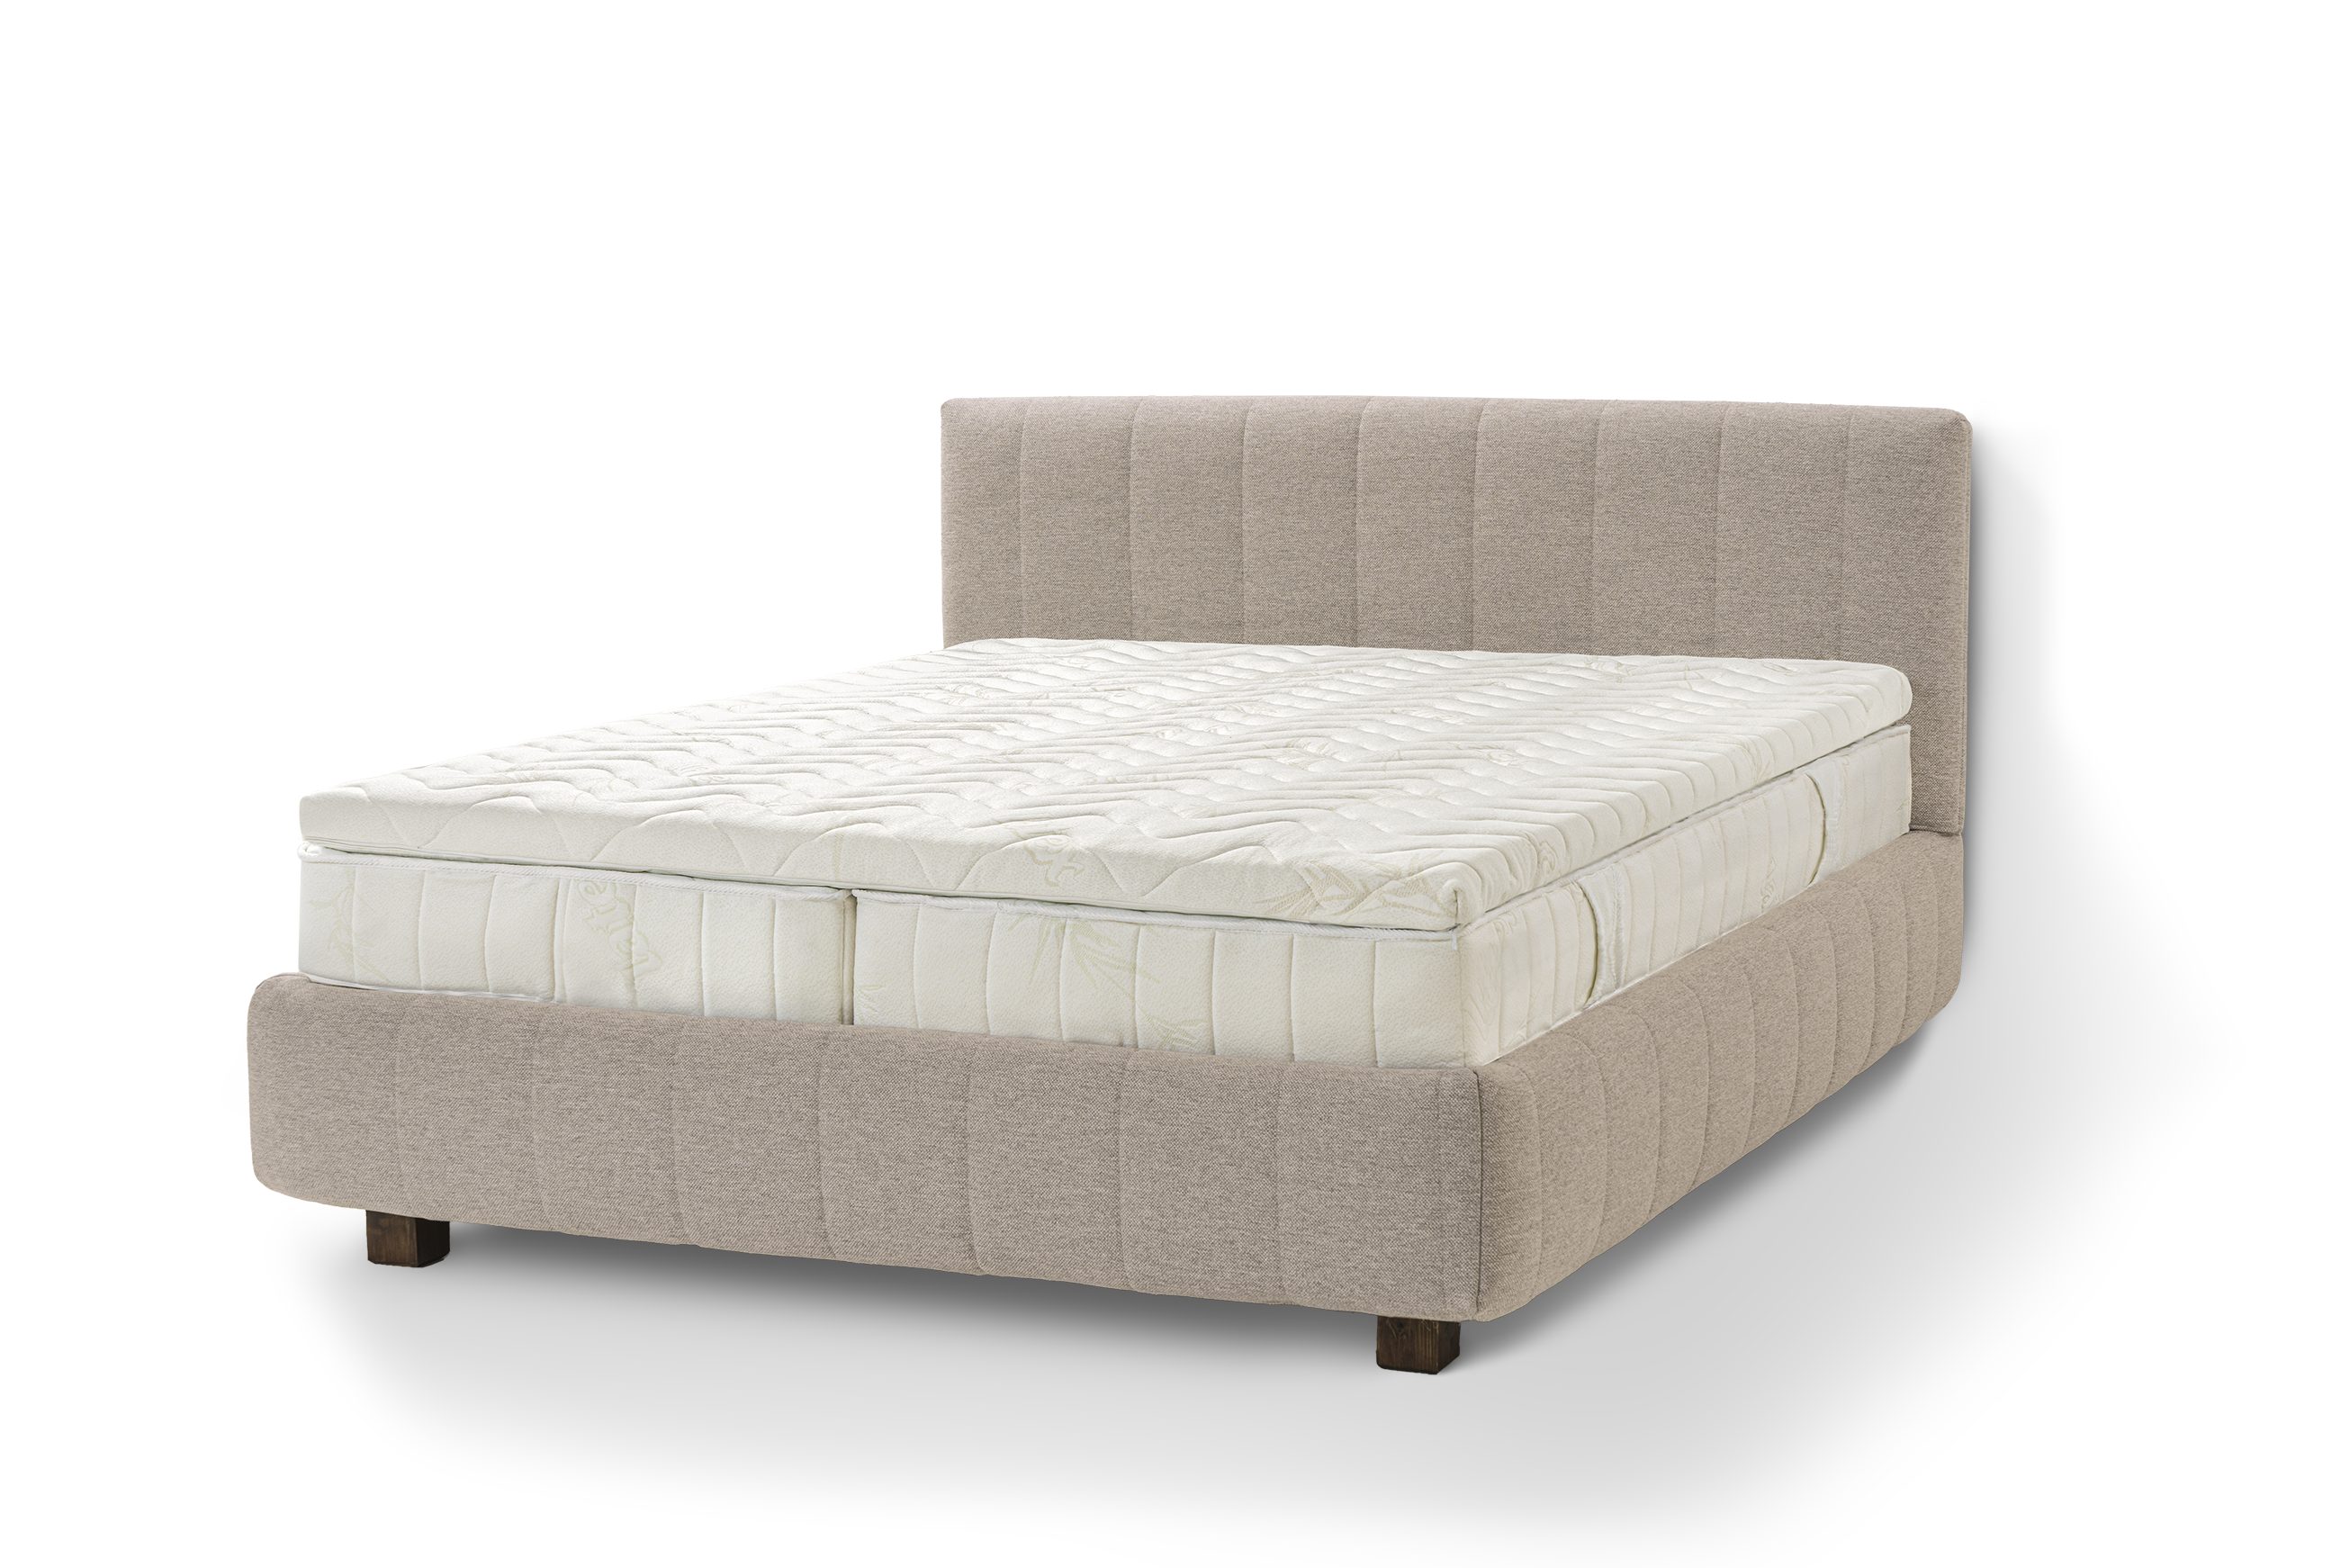 Letti Moderni Holzbett Bett Calma, hergestellt aus hochwertigem Massivholz Siena Beige | Jugendbetten